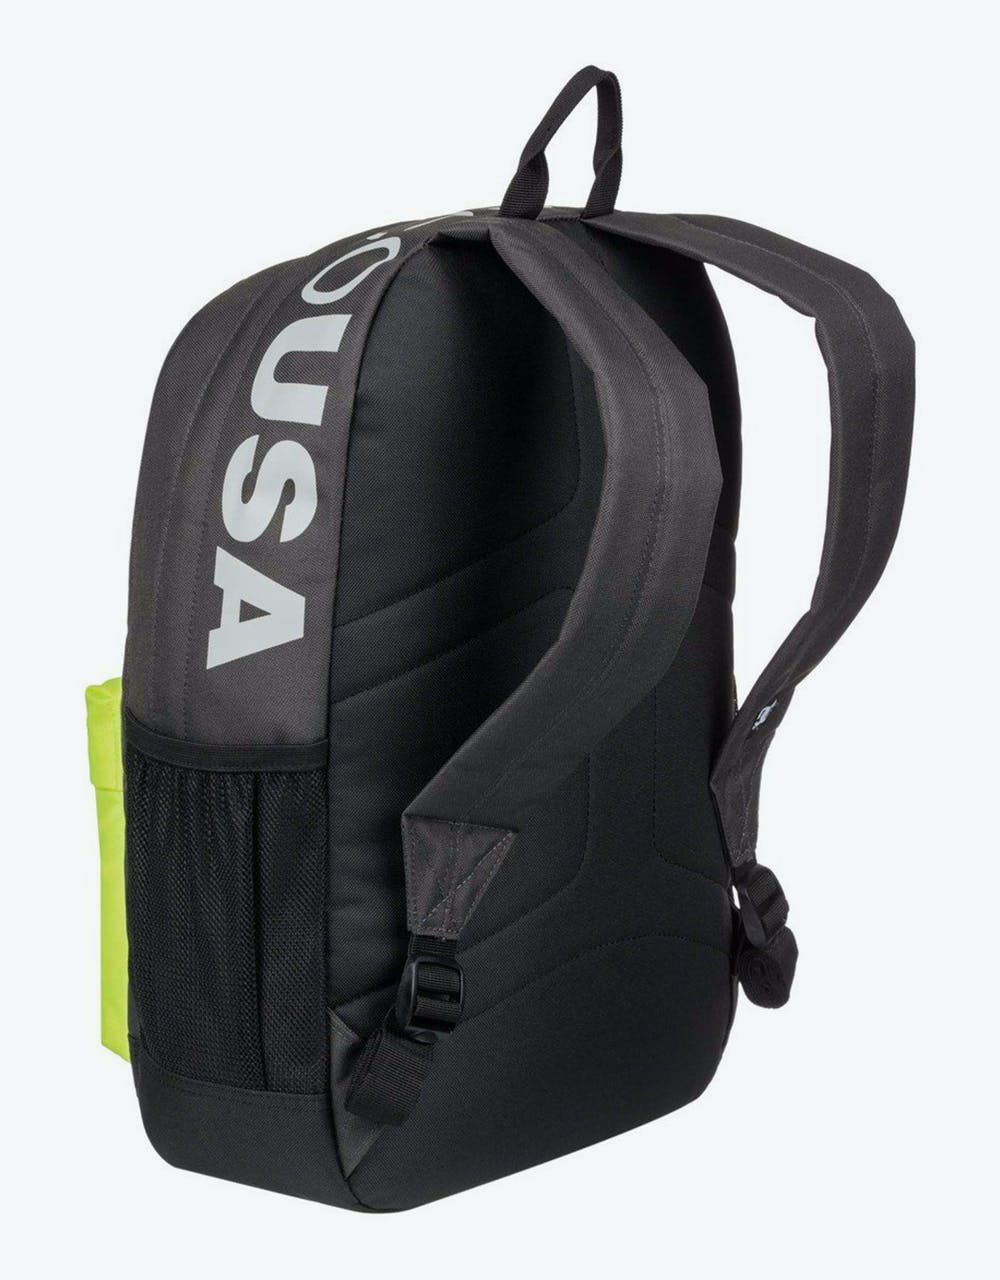 DC Backsider 18.5L Backpack - Dark Olive/Safety Yellow